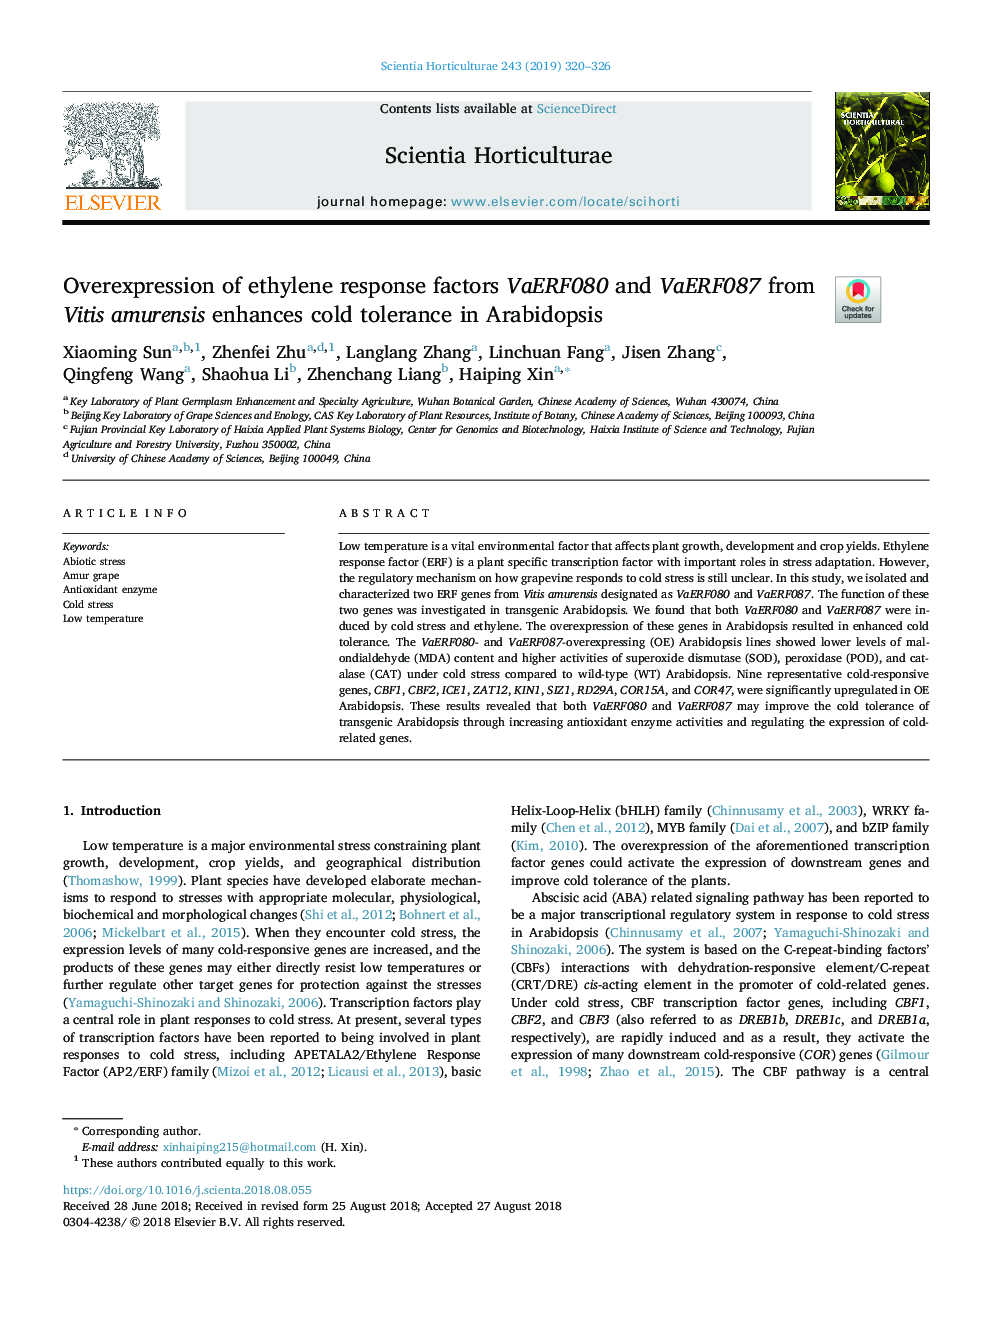 Overexpression of ethylene response factors VaERF080 and VaERF087 from Vitis amurensis enhances cold tolerance in Arabidopsis